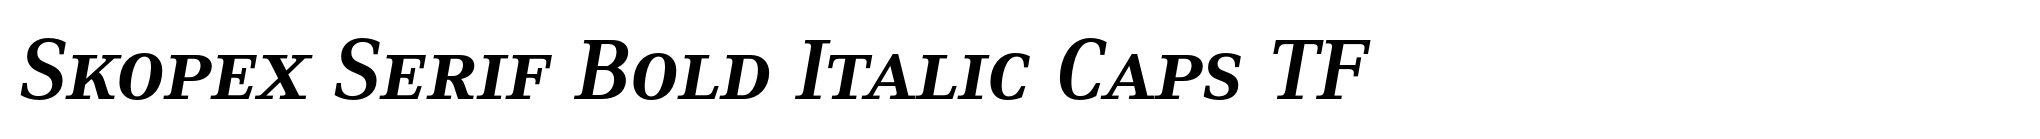 Skopex Serif Bold Italic Caps TF image